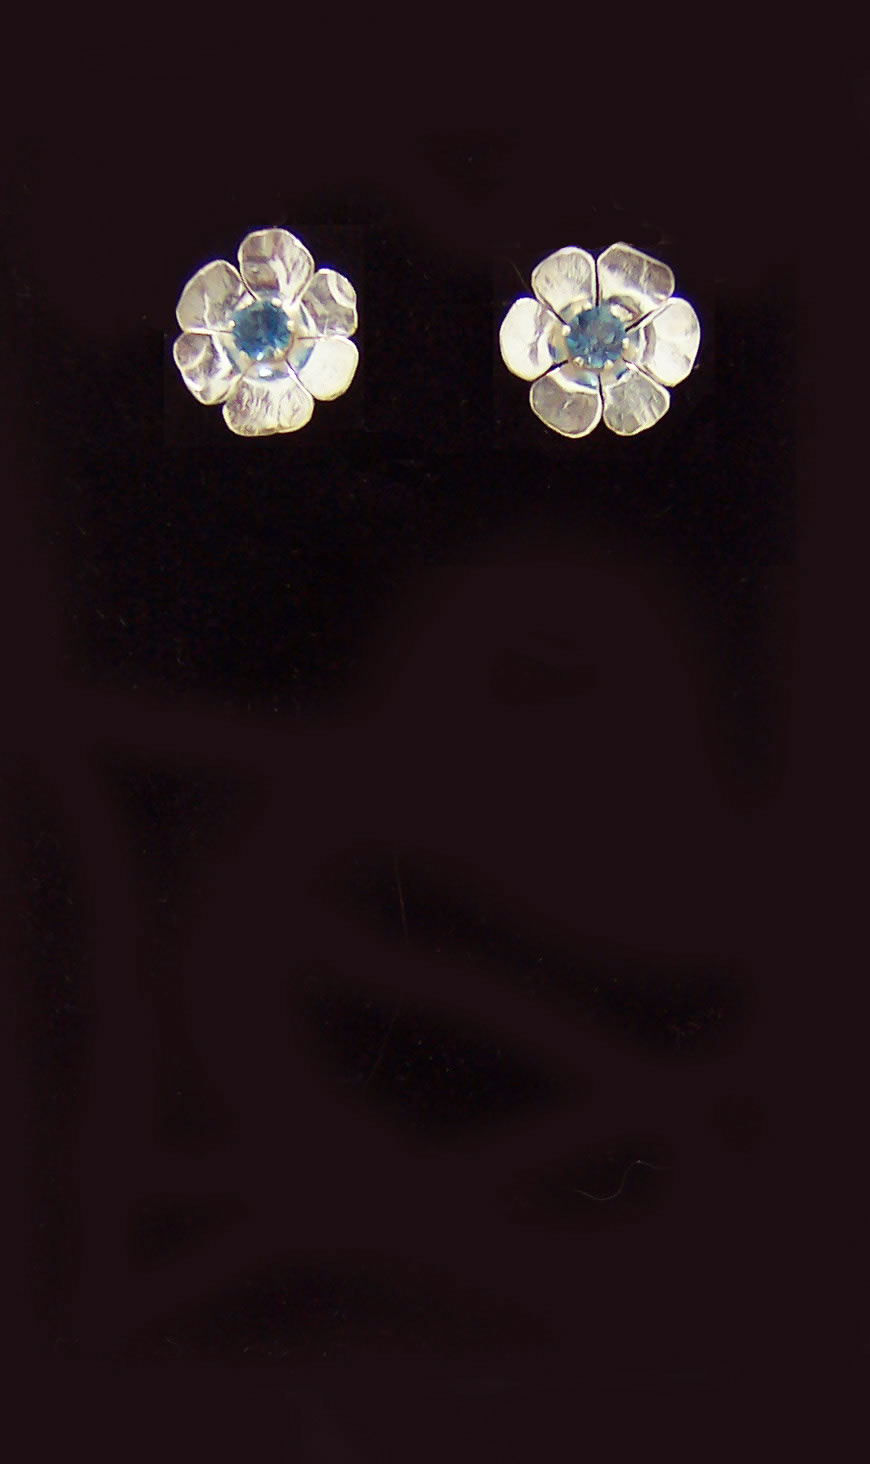 Oxidised Silver and Topaz Stud Earrings